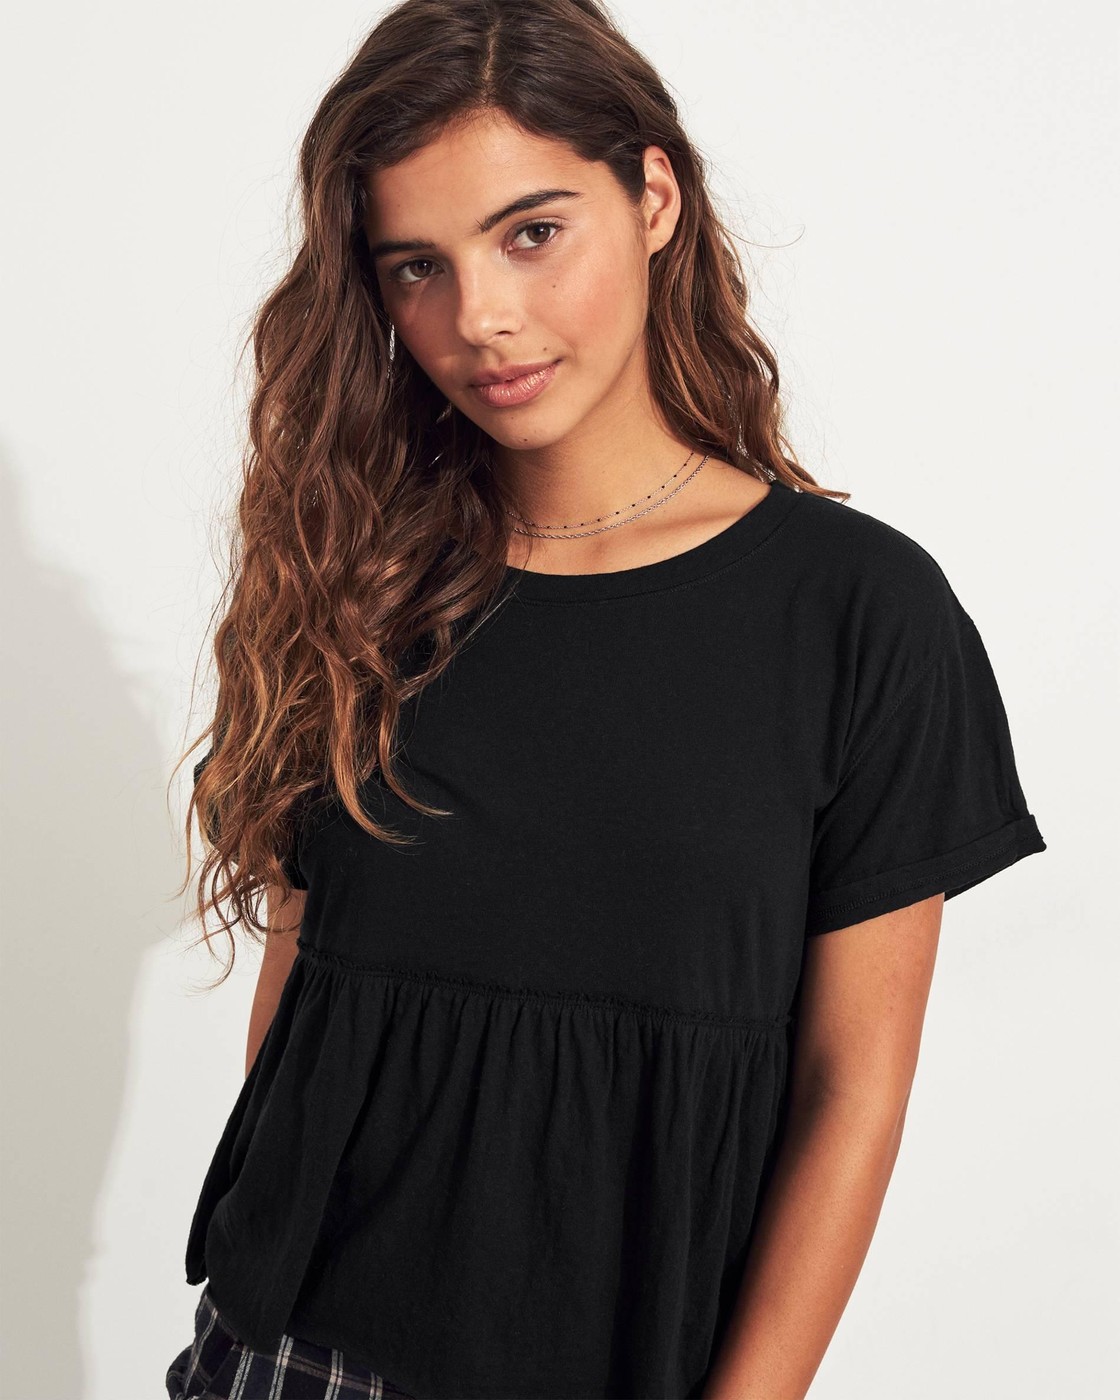 Черная футболка - женская футболка Hollister, S, S